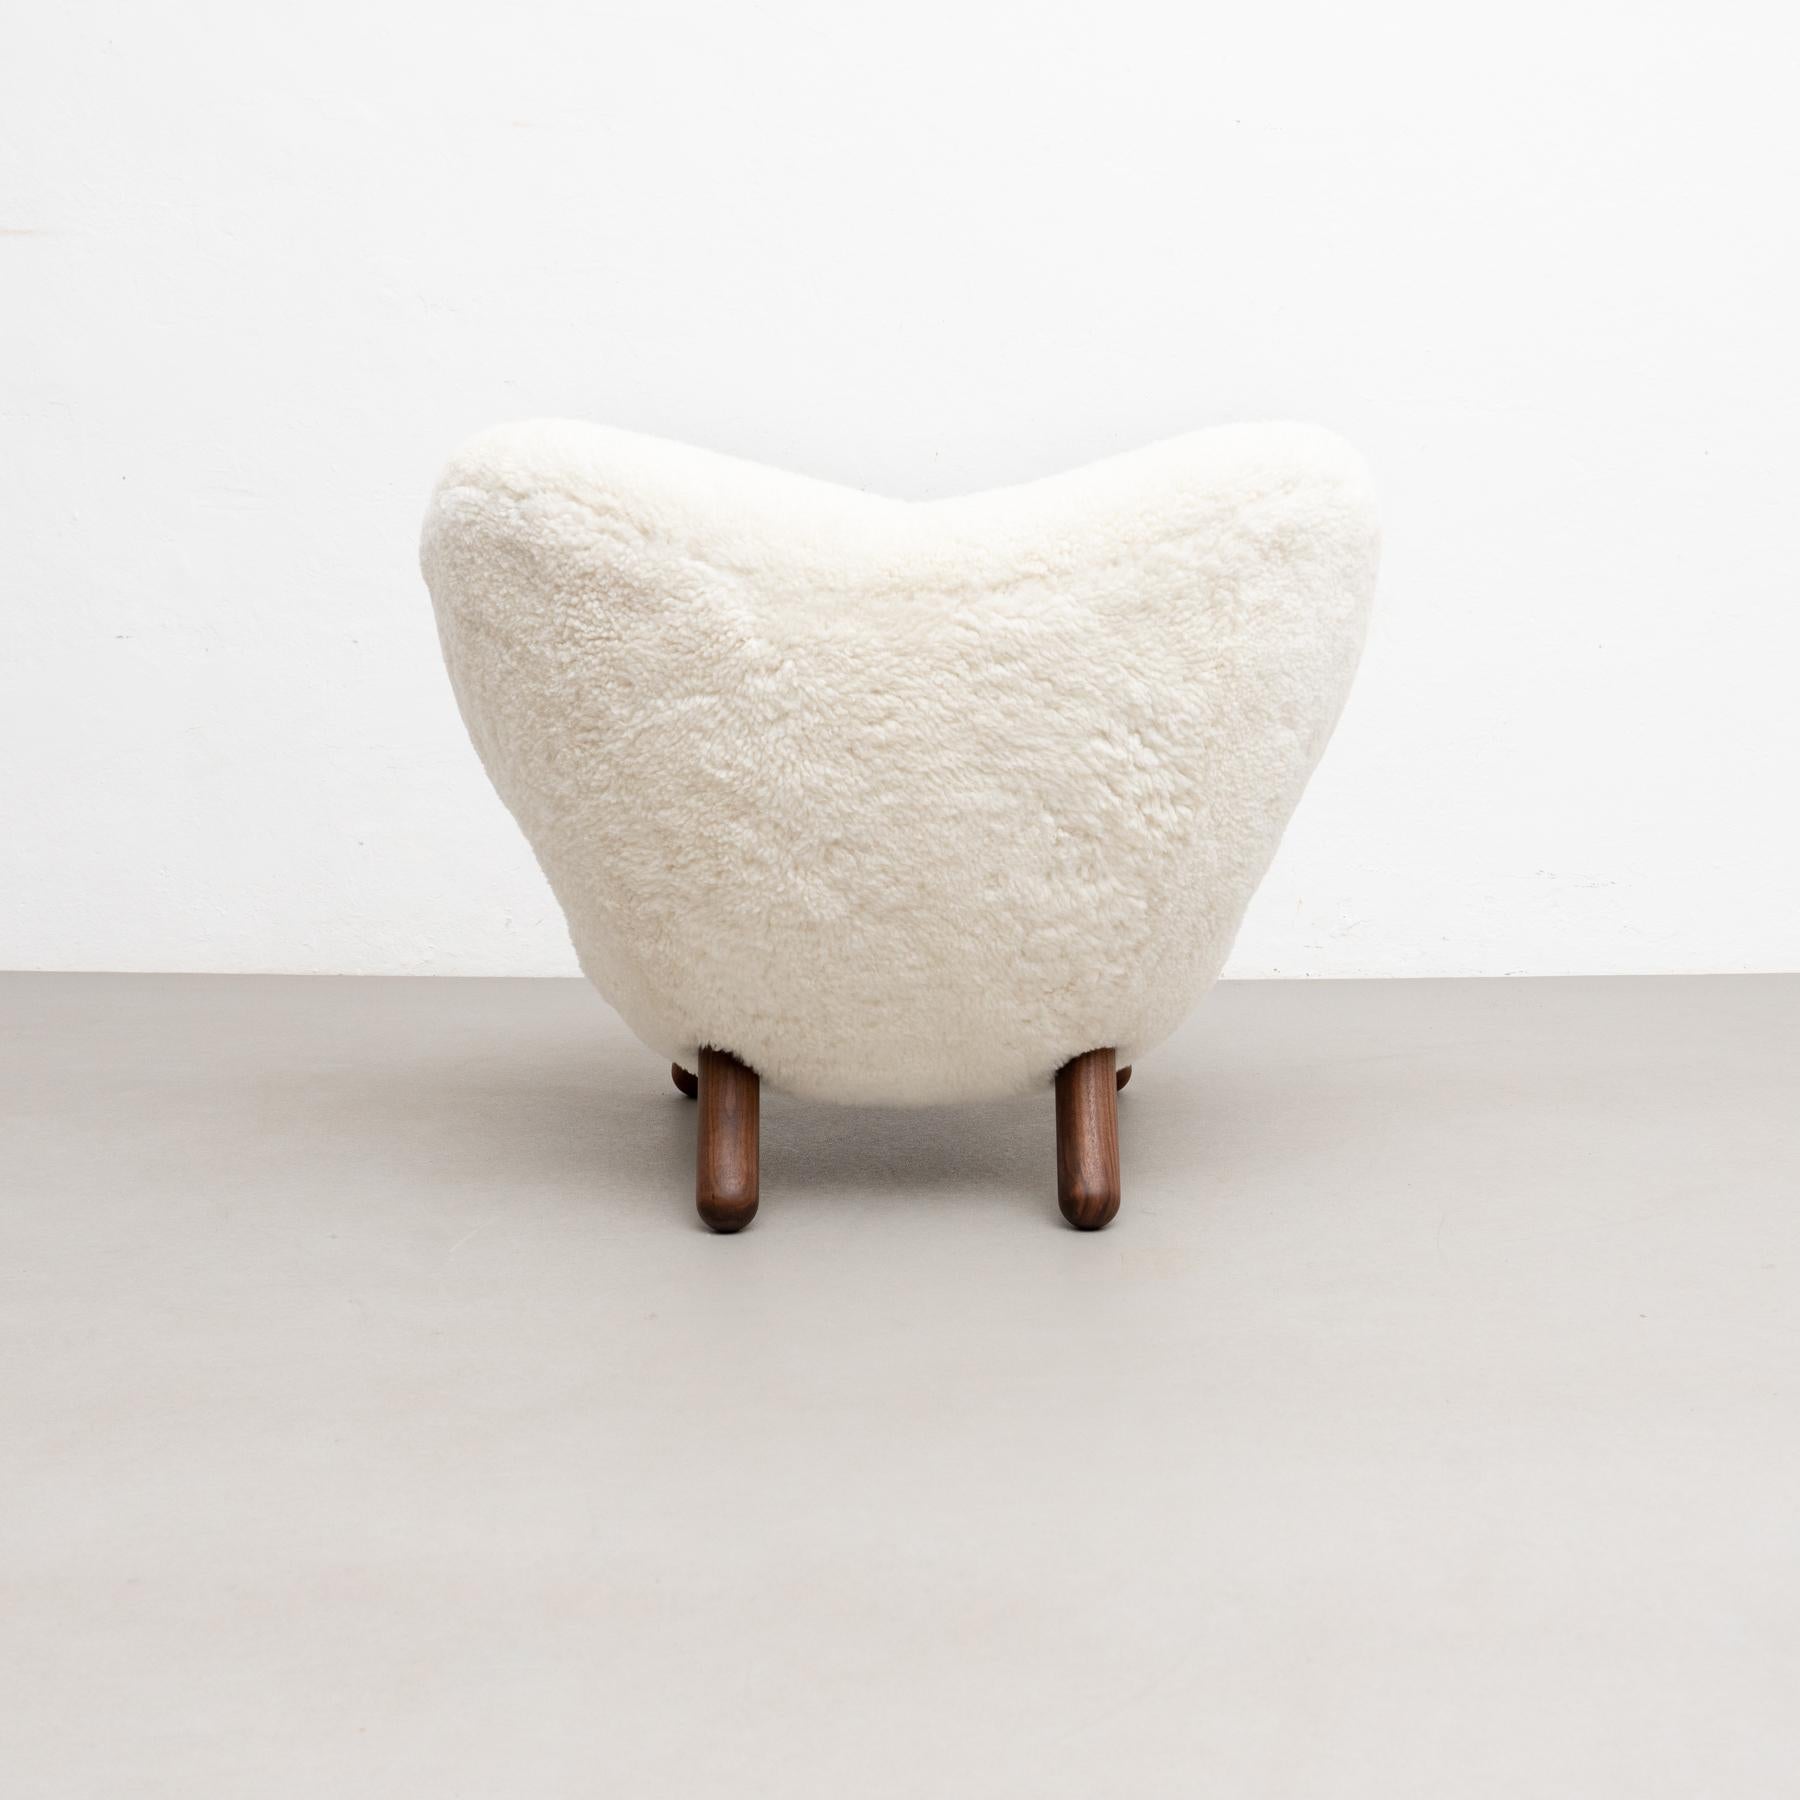 Finn Juhl Pelican Chair Upholstered in Offwhite Sheepskin (Chaise Pélican recouverte de peau de mouton blanc cassé) en vente 5